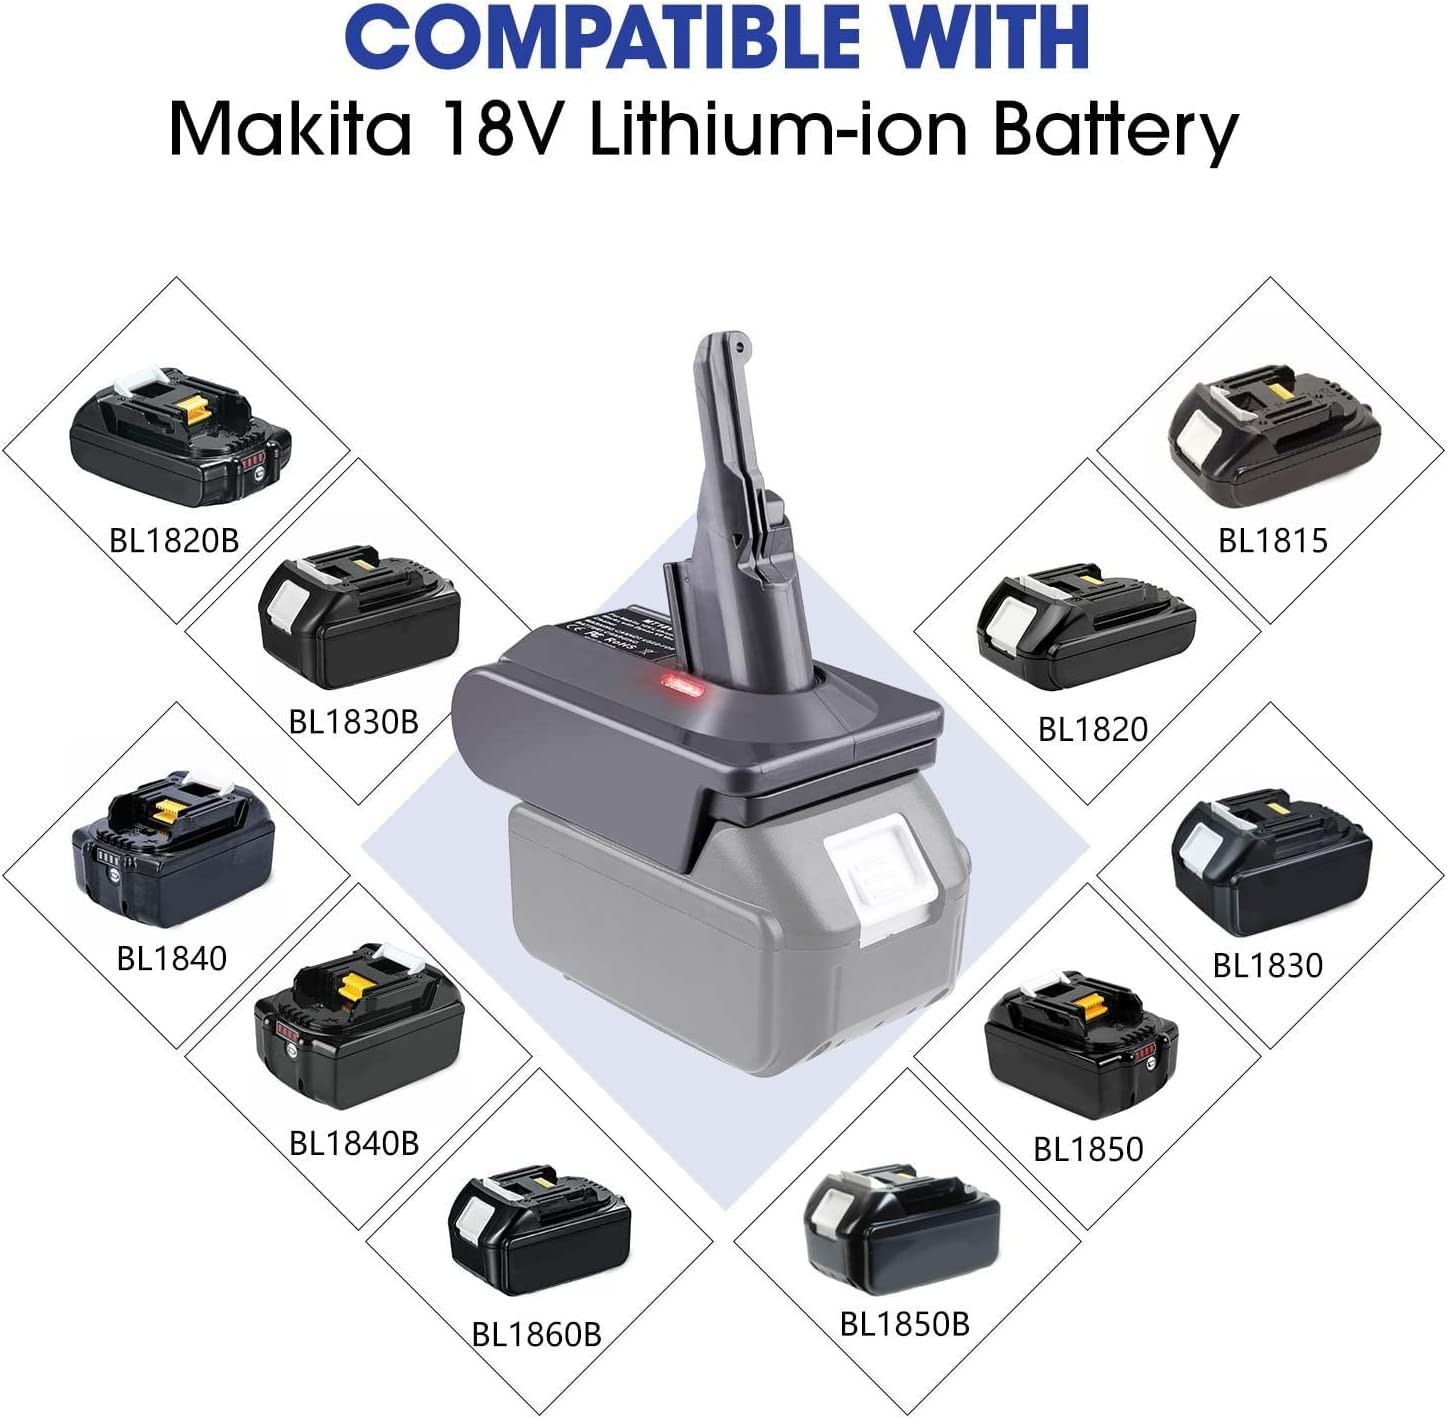 Адаптер за батерии Dyson V7 за литиева батерия Makita 18V